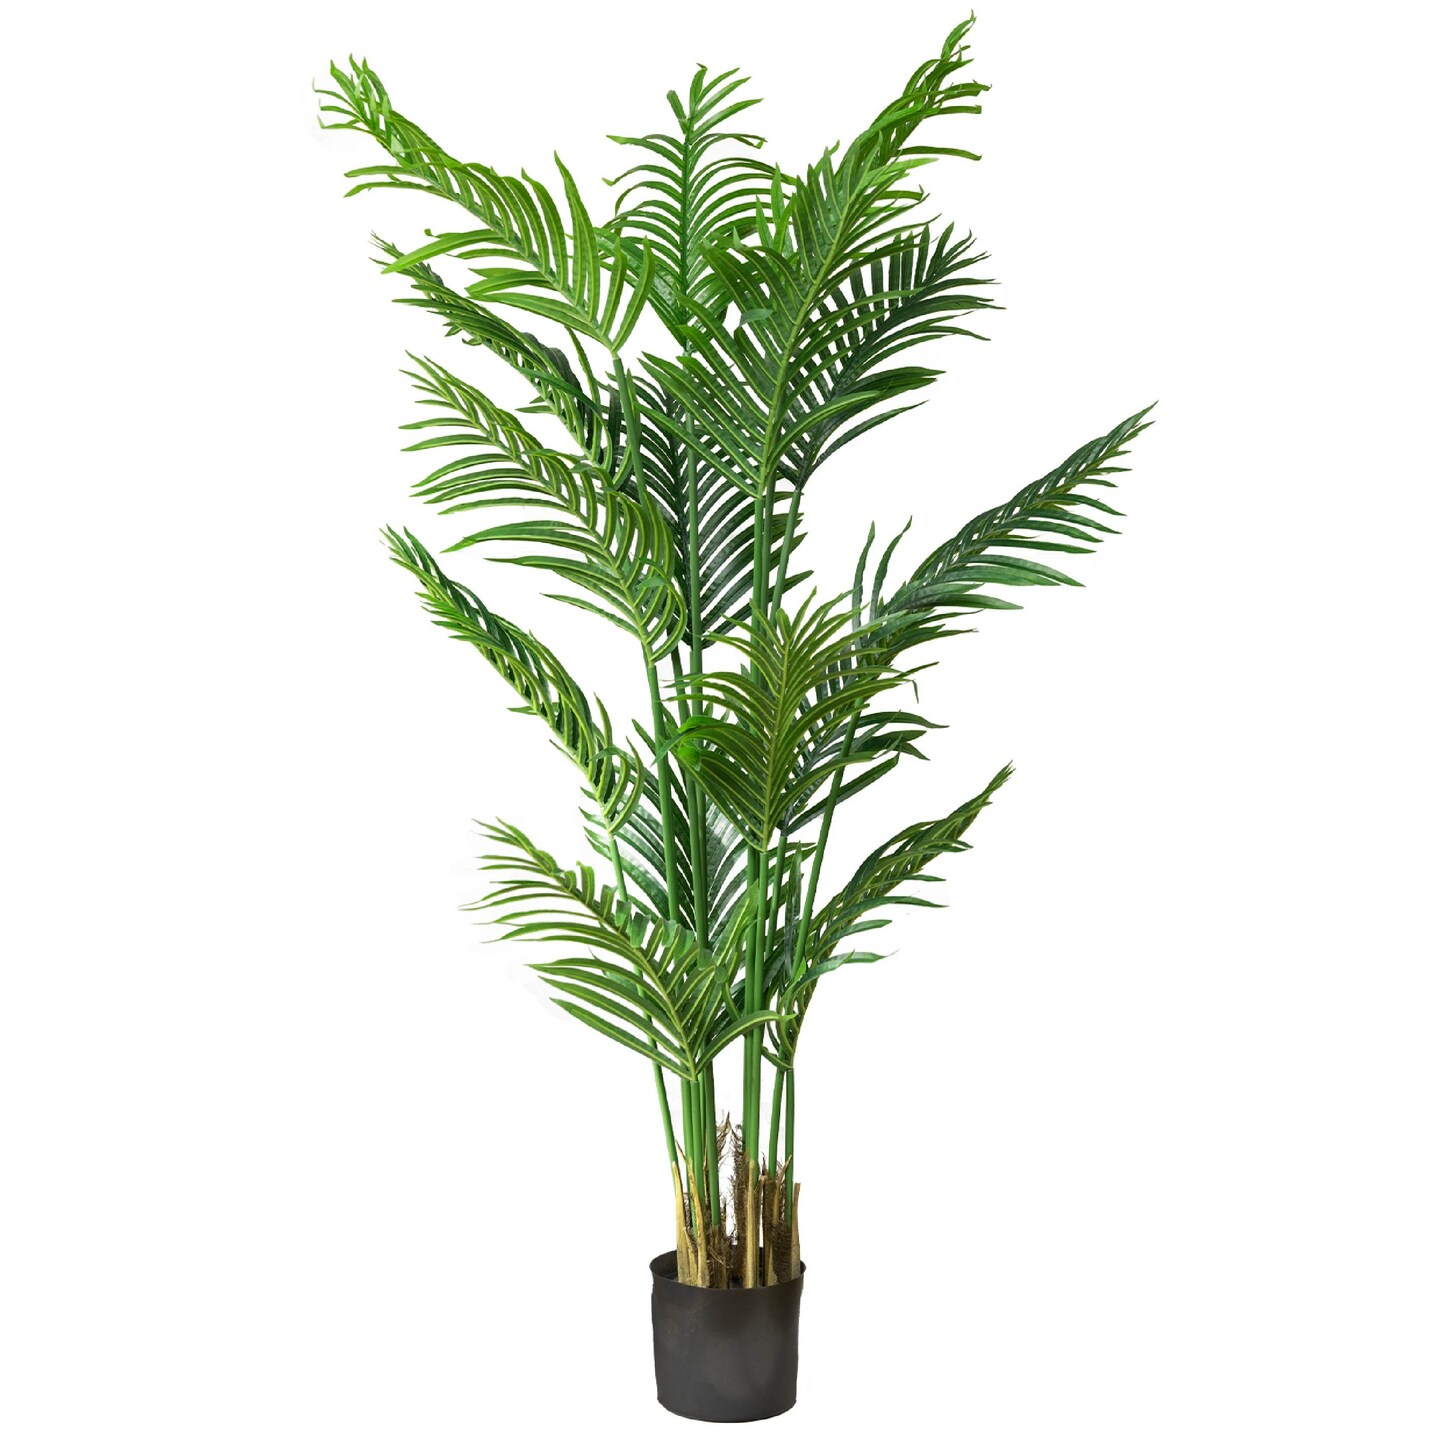 Artificial Plants & Trees - Indoor/Outdoor Use